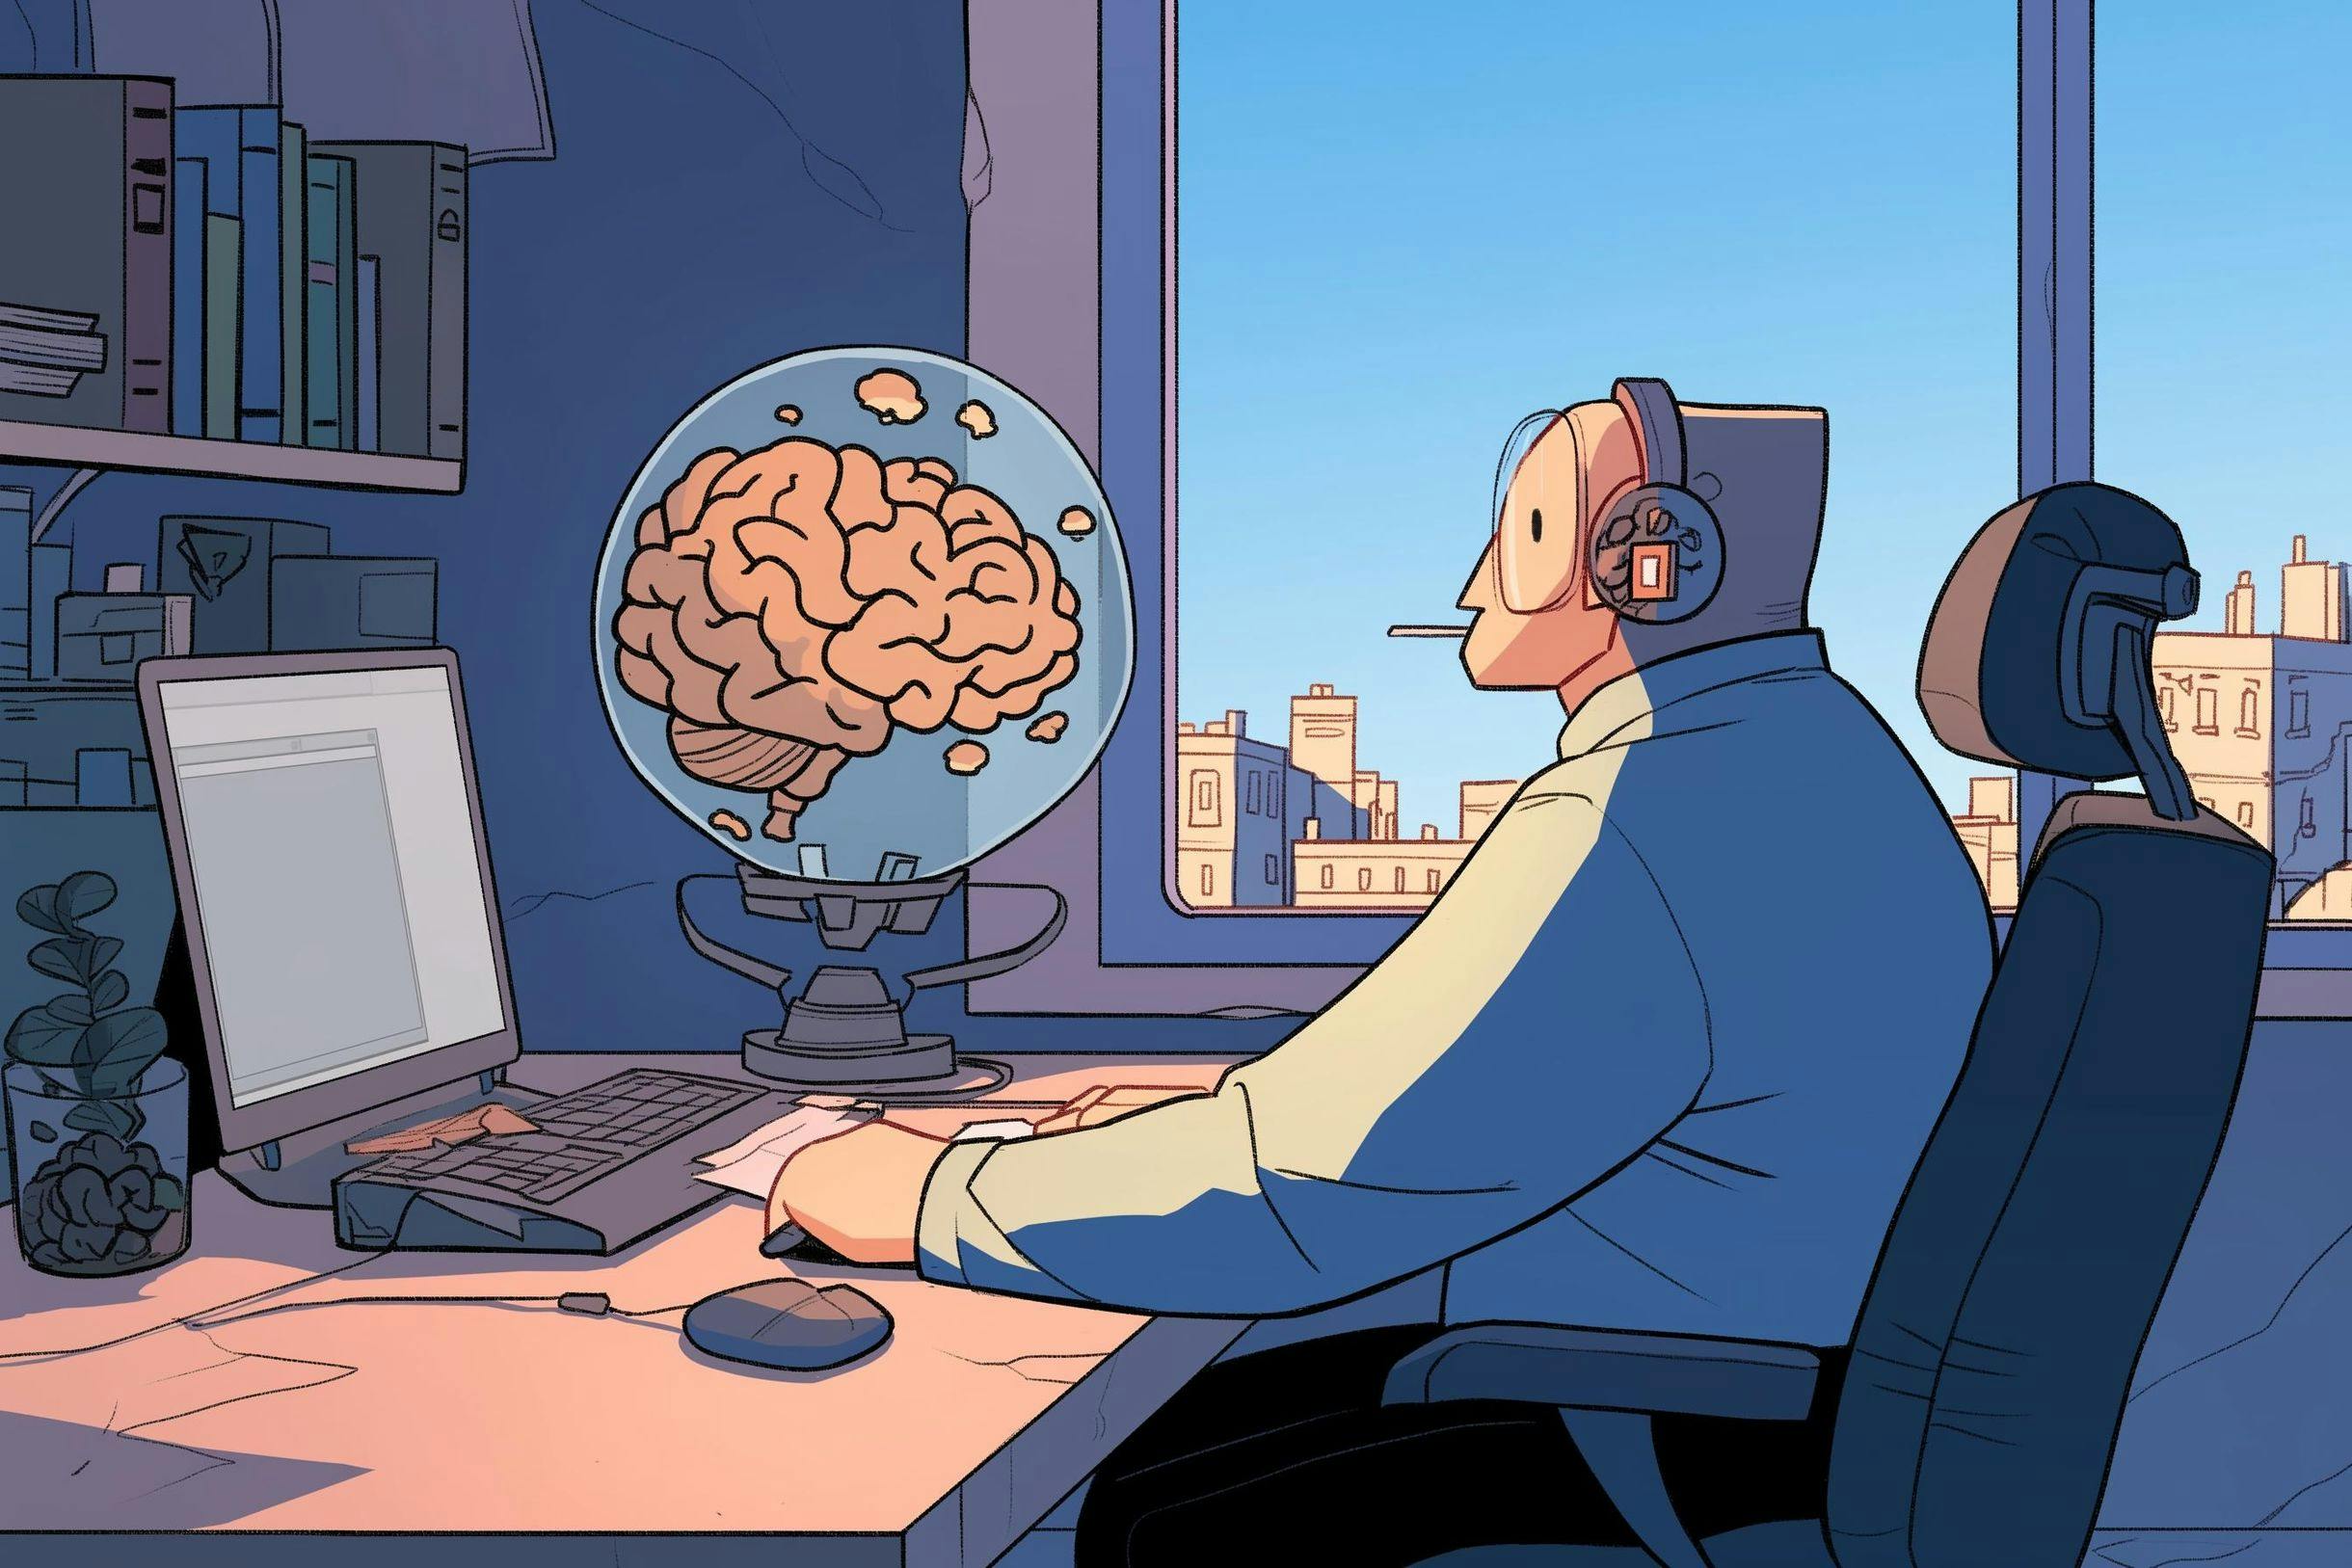 A man is analysing a brain